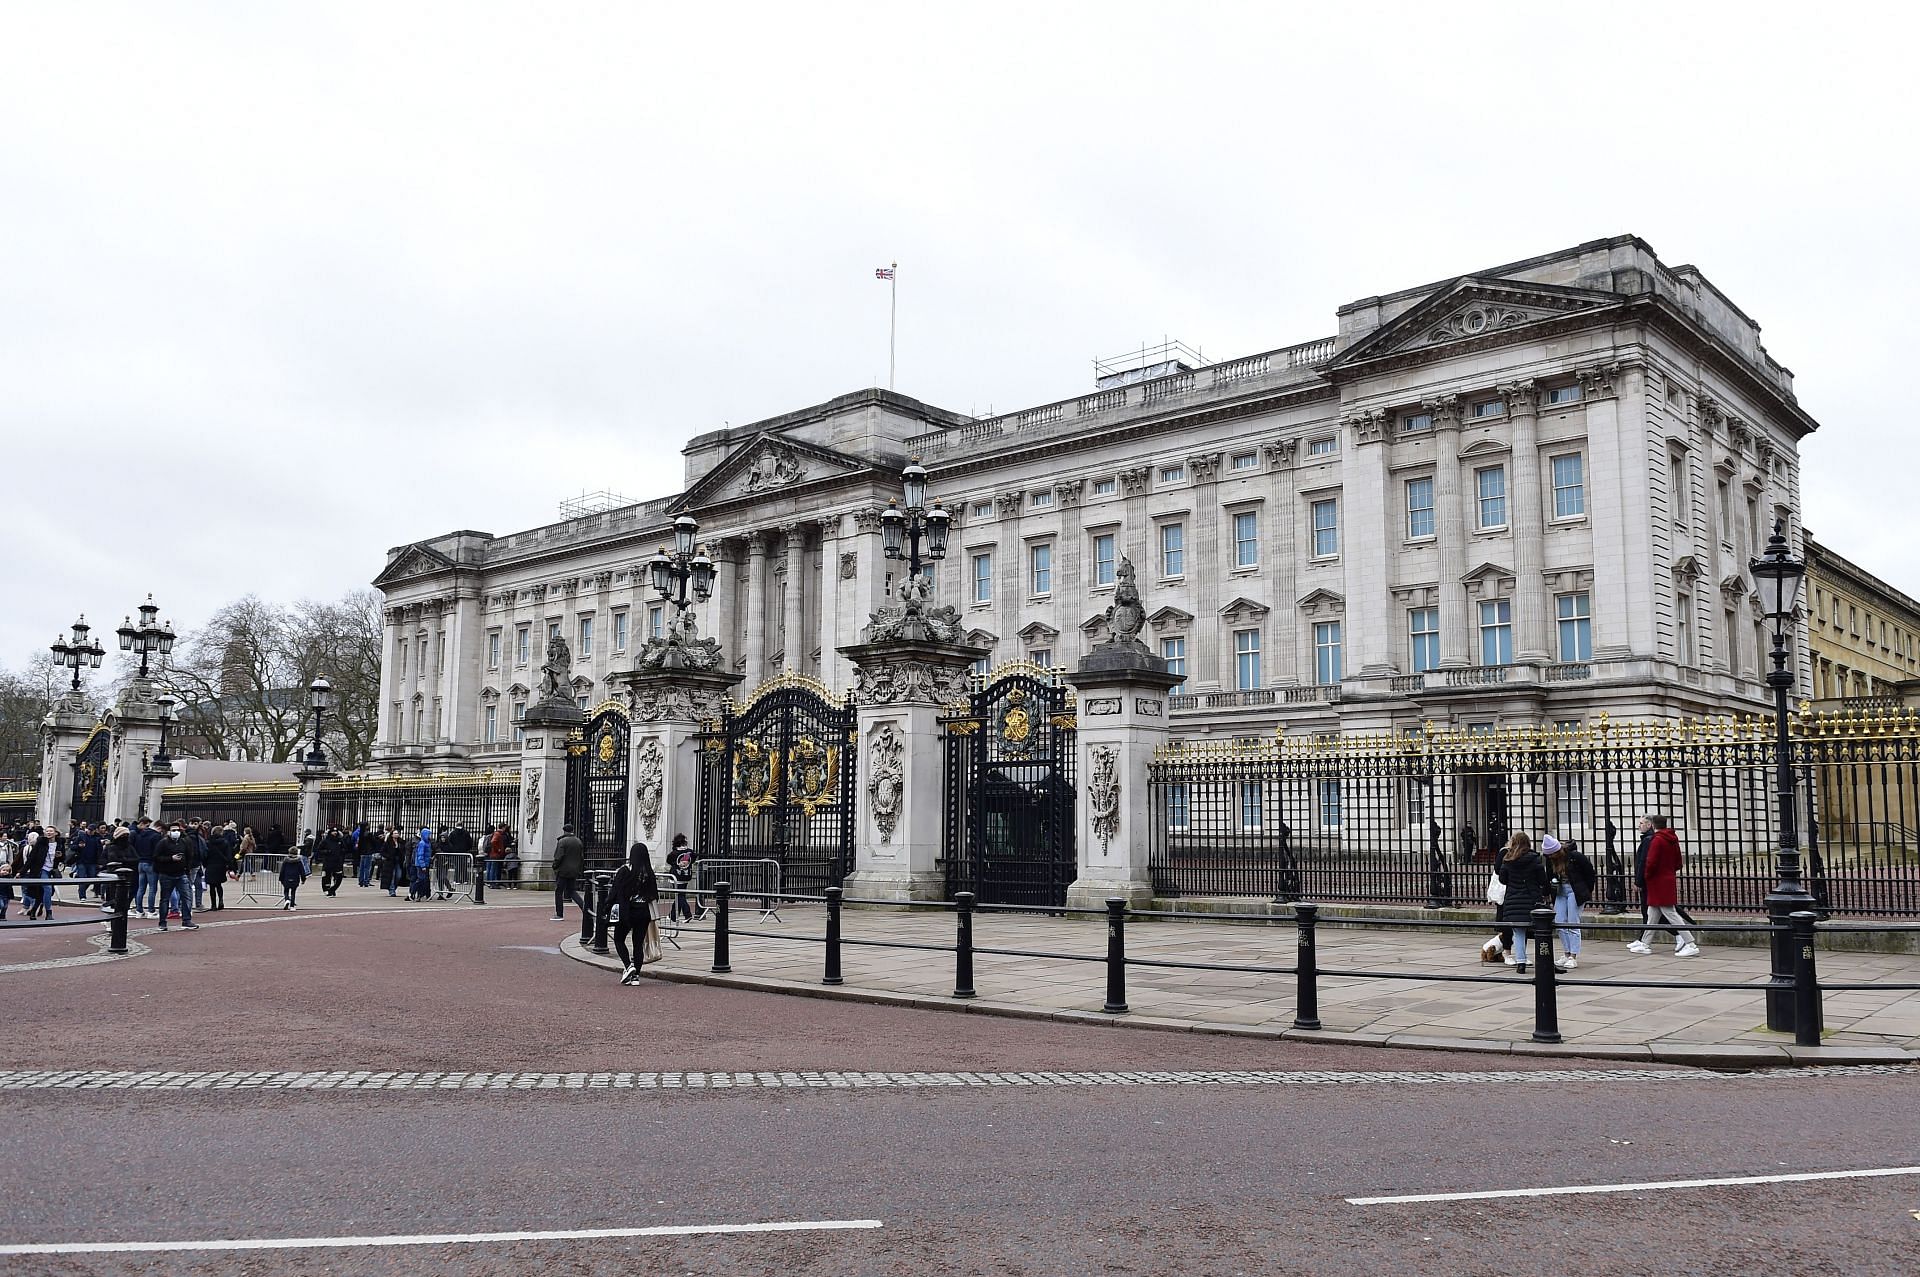 An angled view of Buckingham Palace (Image via Getty)